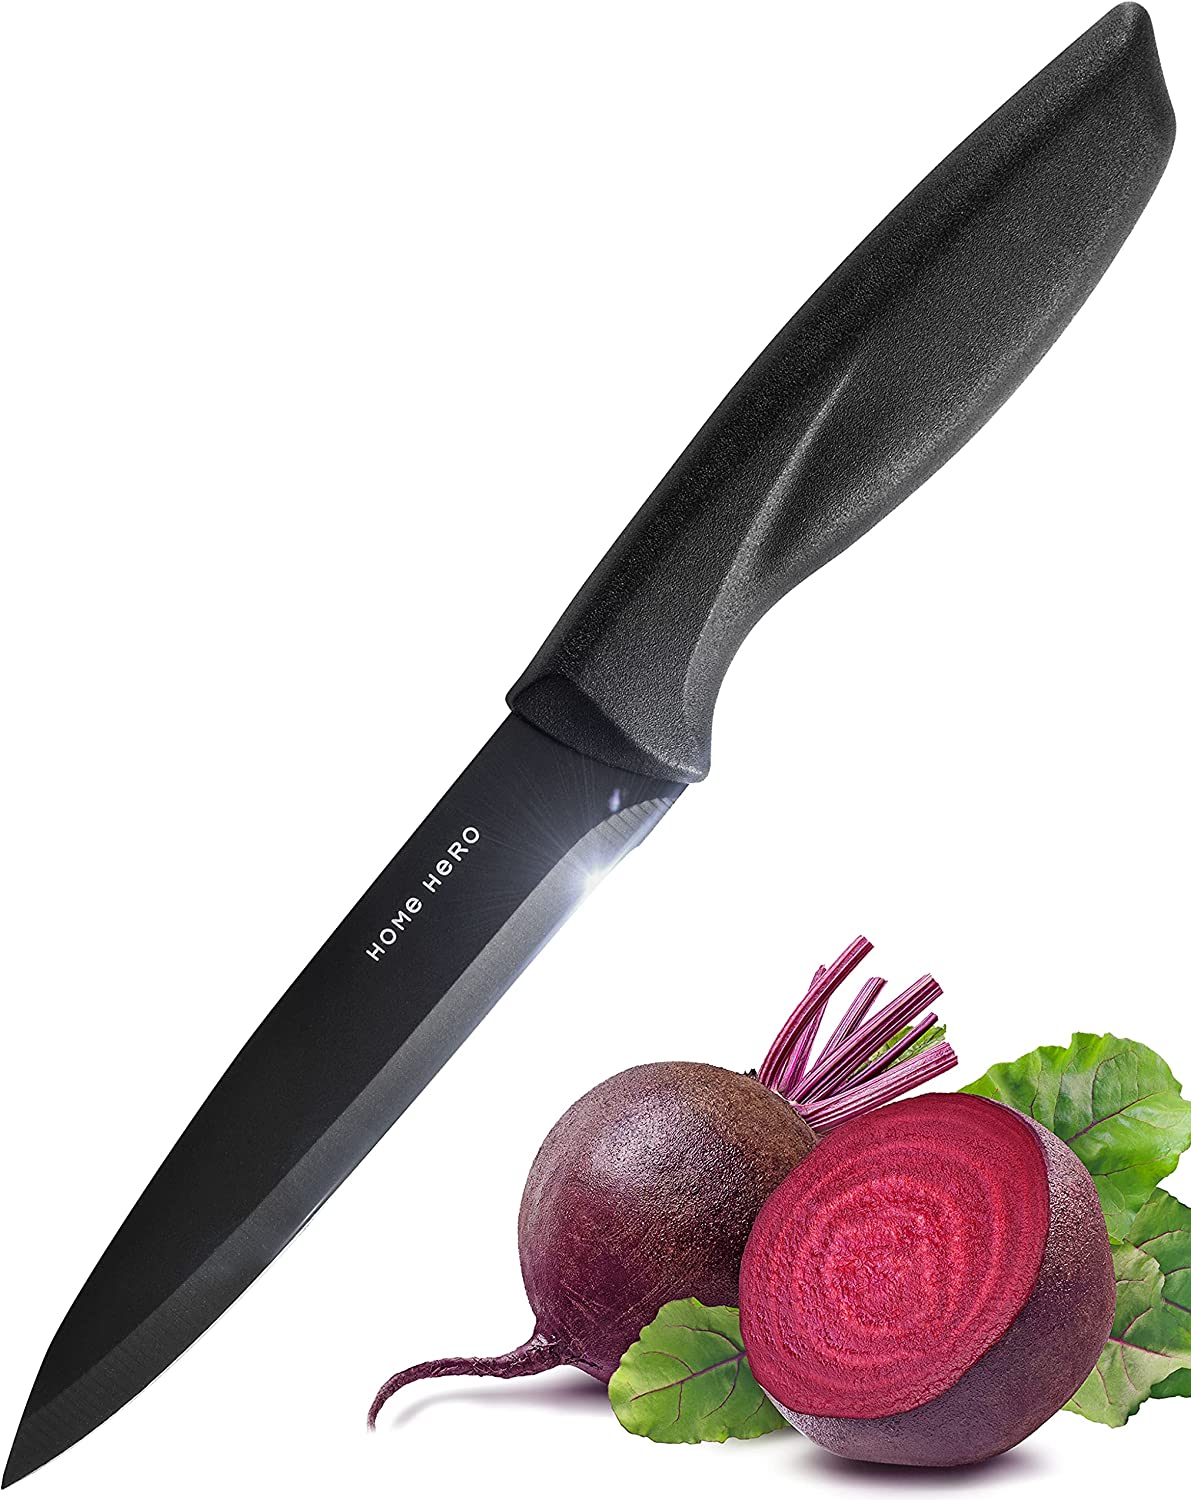 https://www.dontwasteyourmoney.com/wp-content/uploads/2019/11/home-hero-chef-vegetable-knife-8-inch.jpg